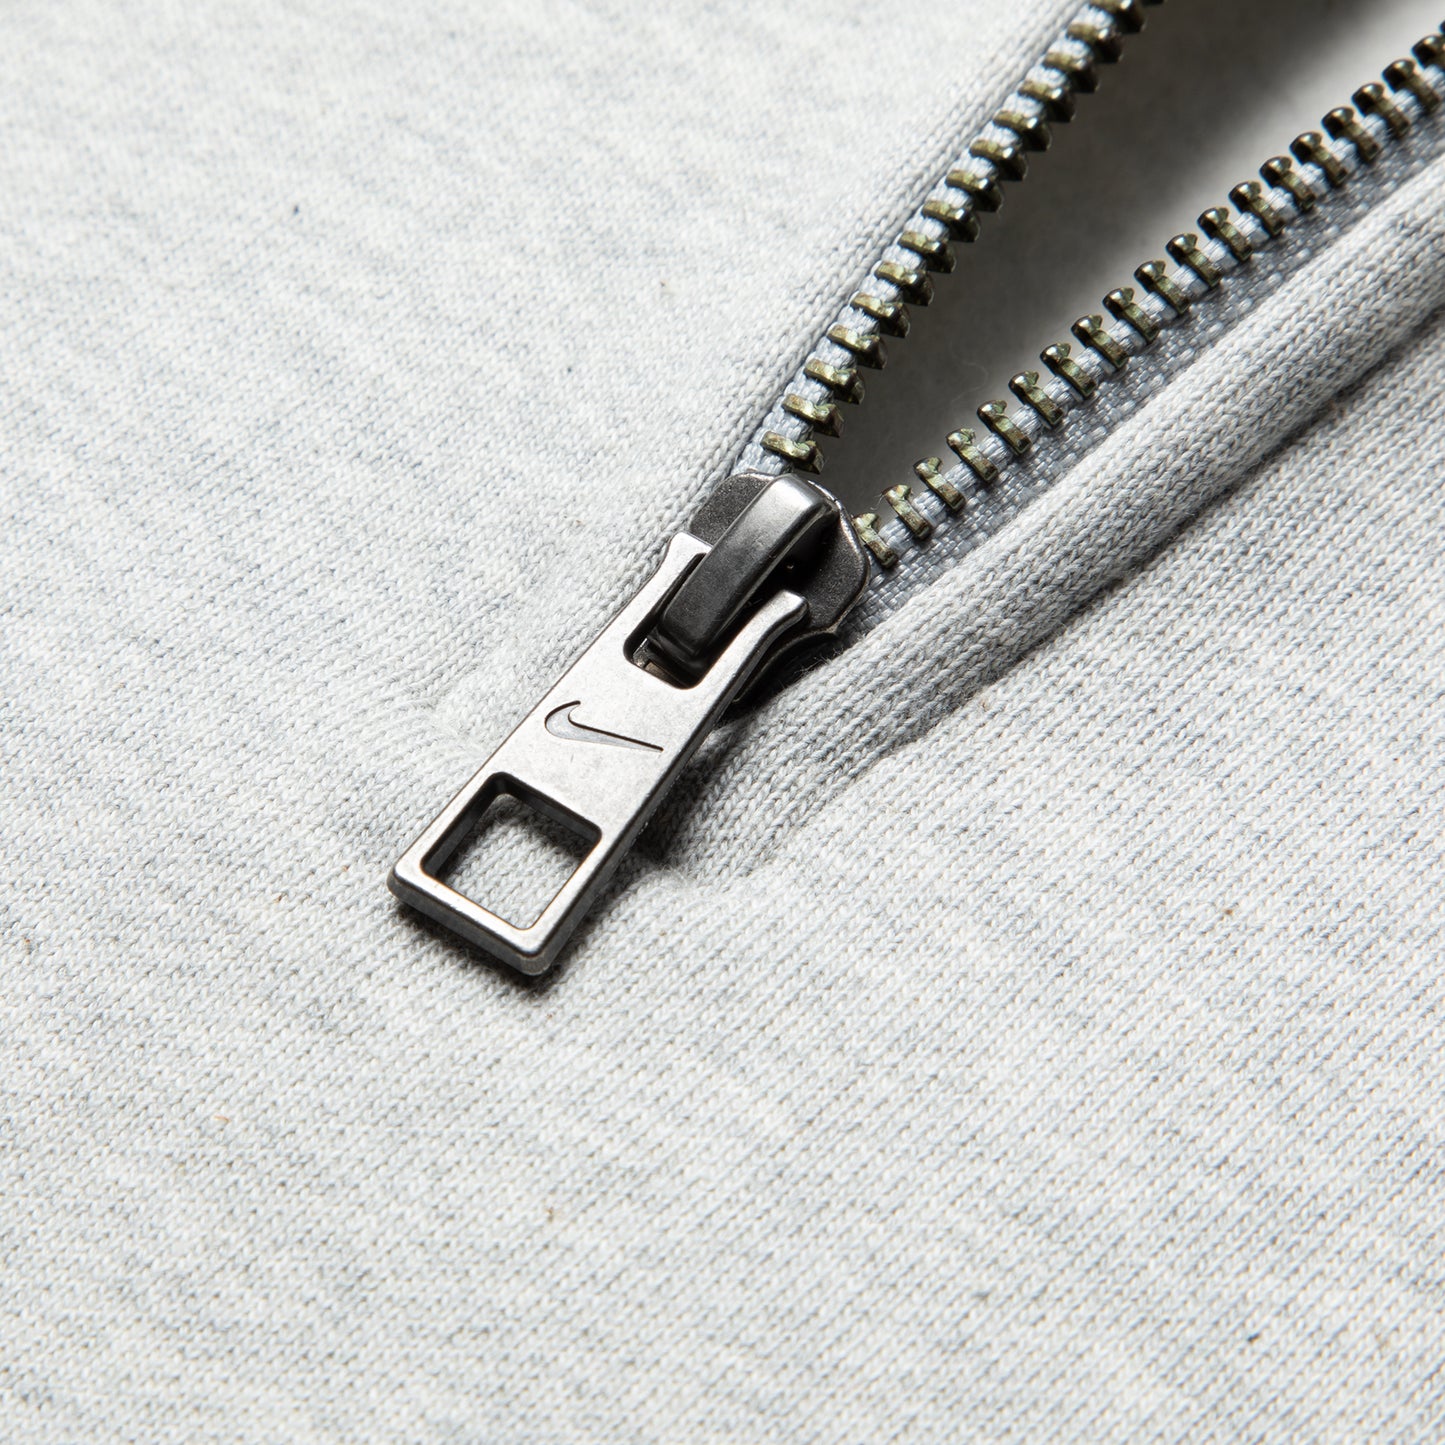 Nike SB 1/4-Zip Fleece Skate Pullover (Grey Heather)